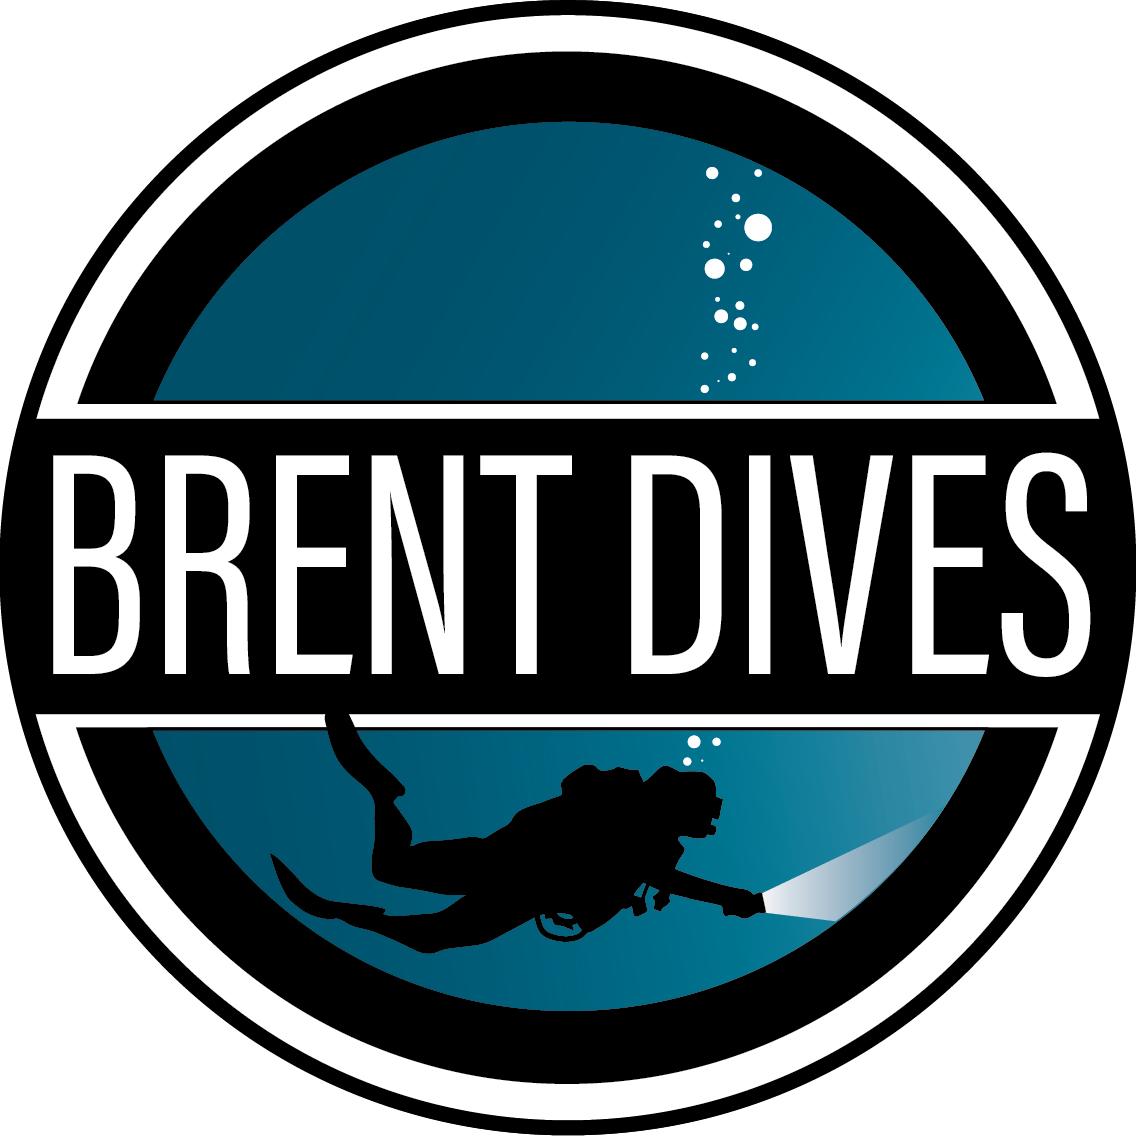 Brent Dives's images